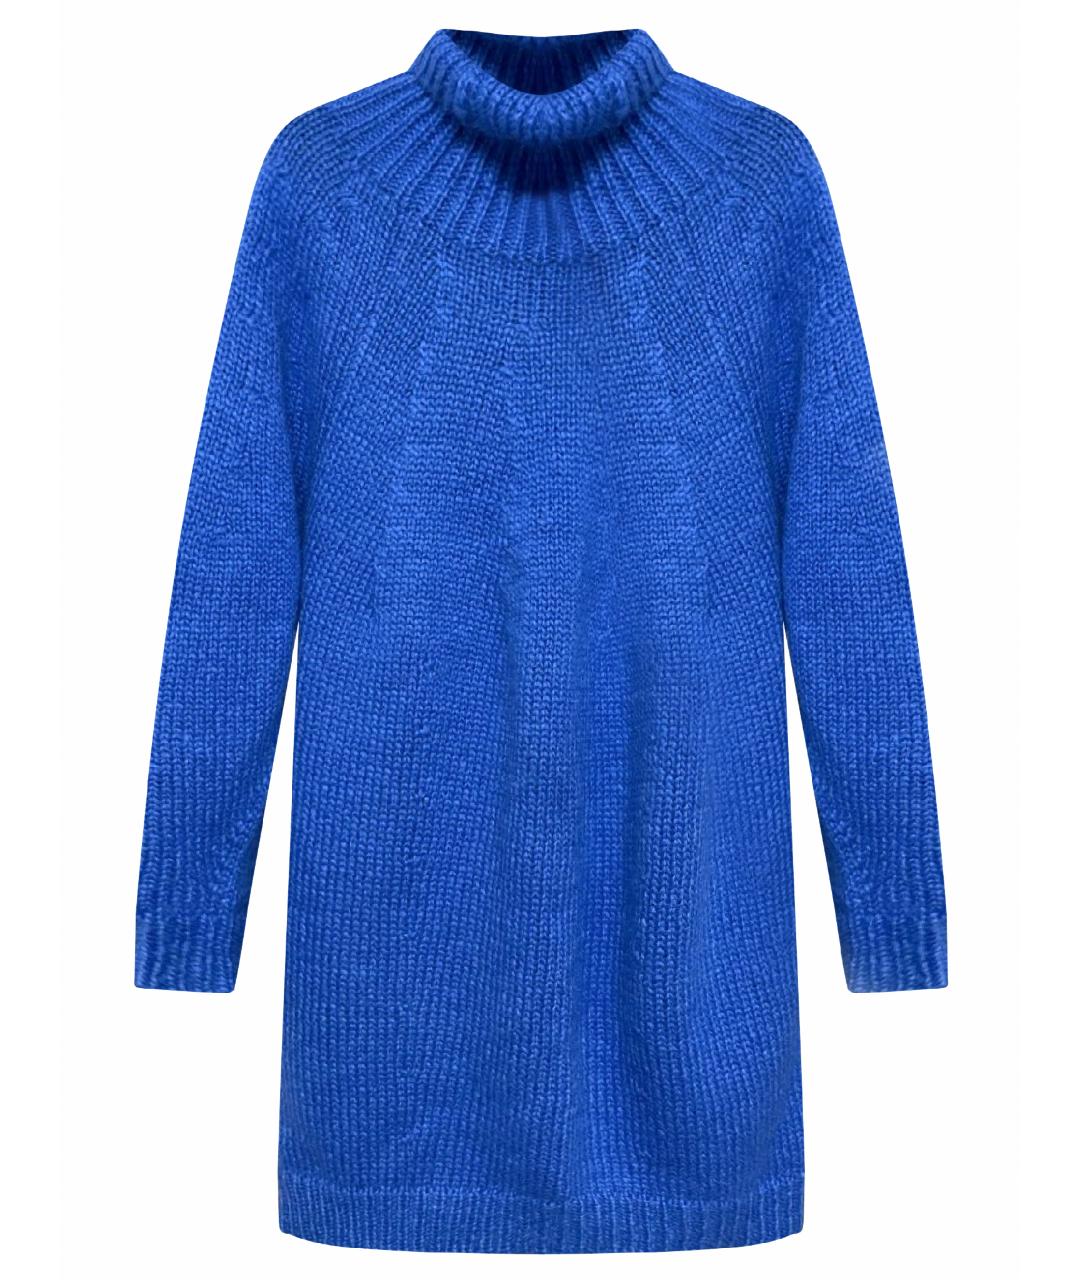 AGANOVICH Синий джемпер / свитер, фото 1